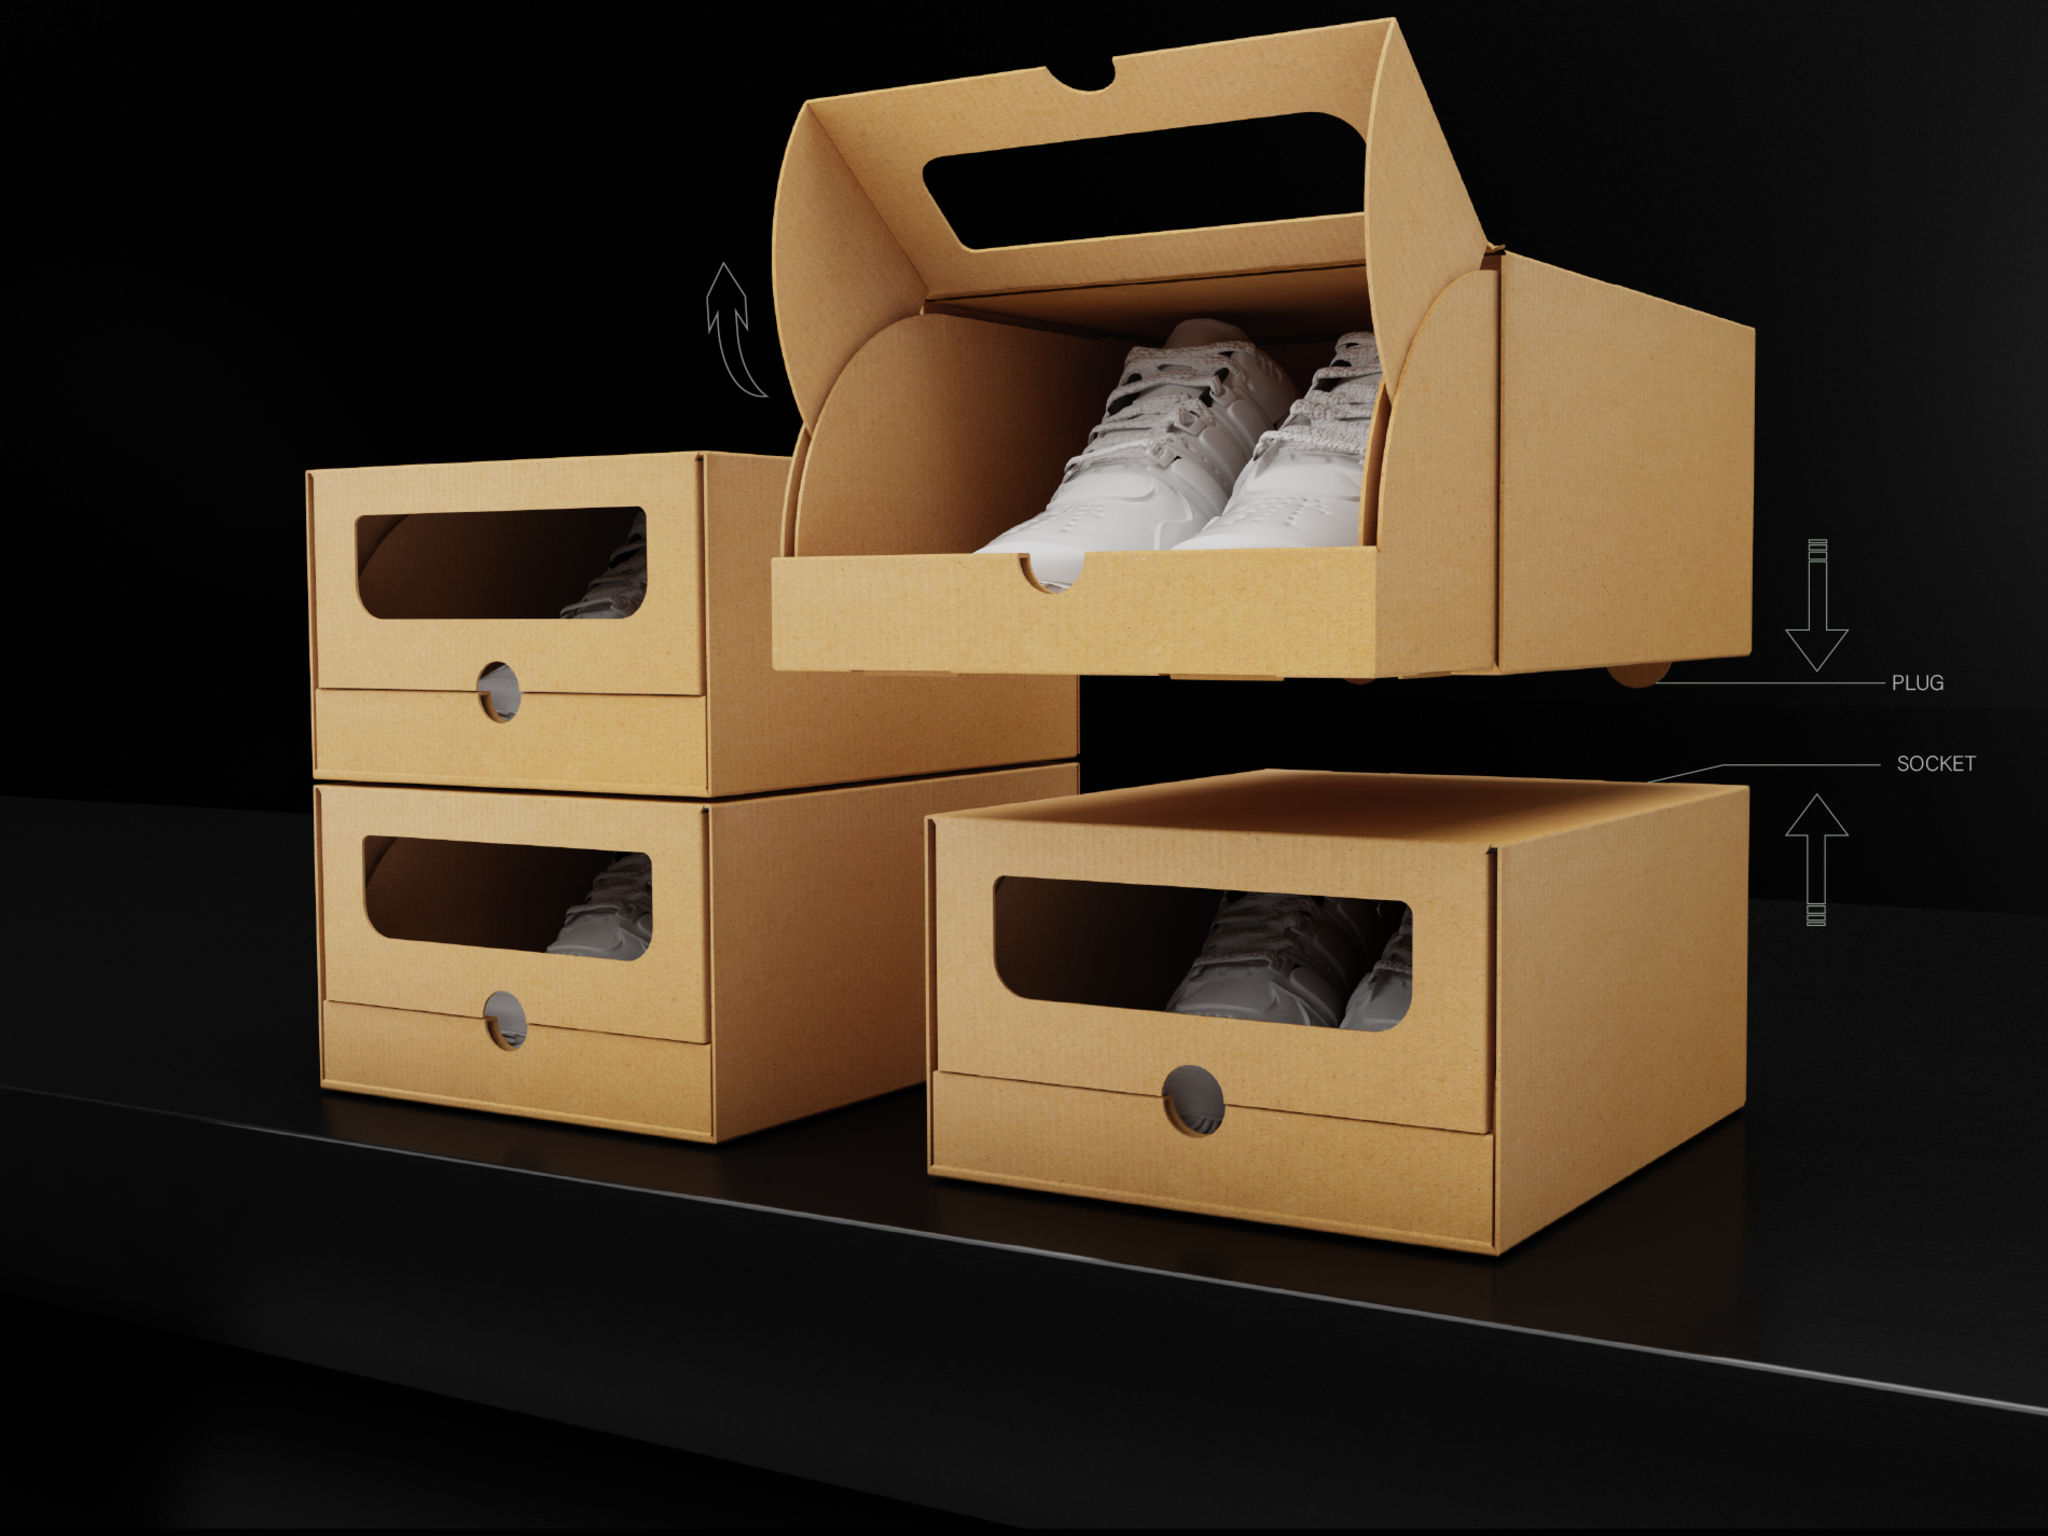 If Design Shoe Box Design With Creative Storage